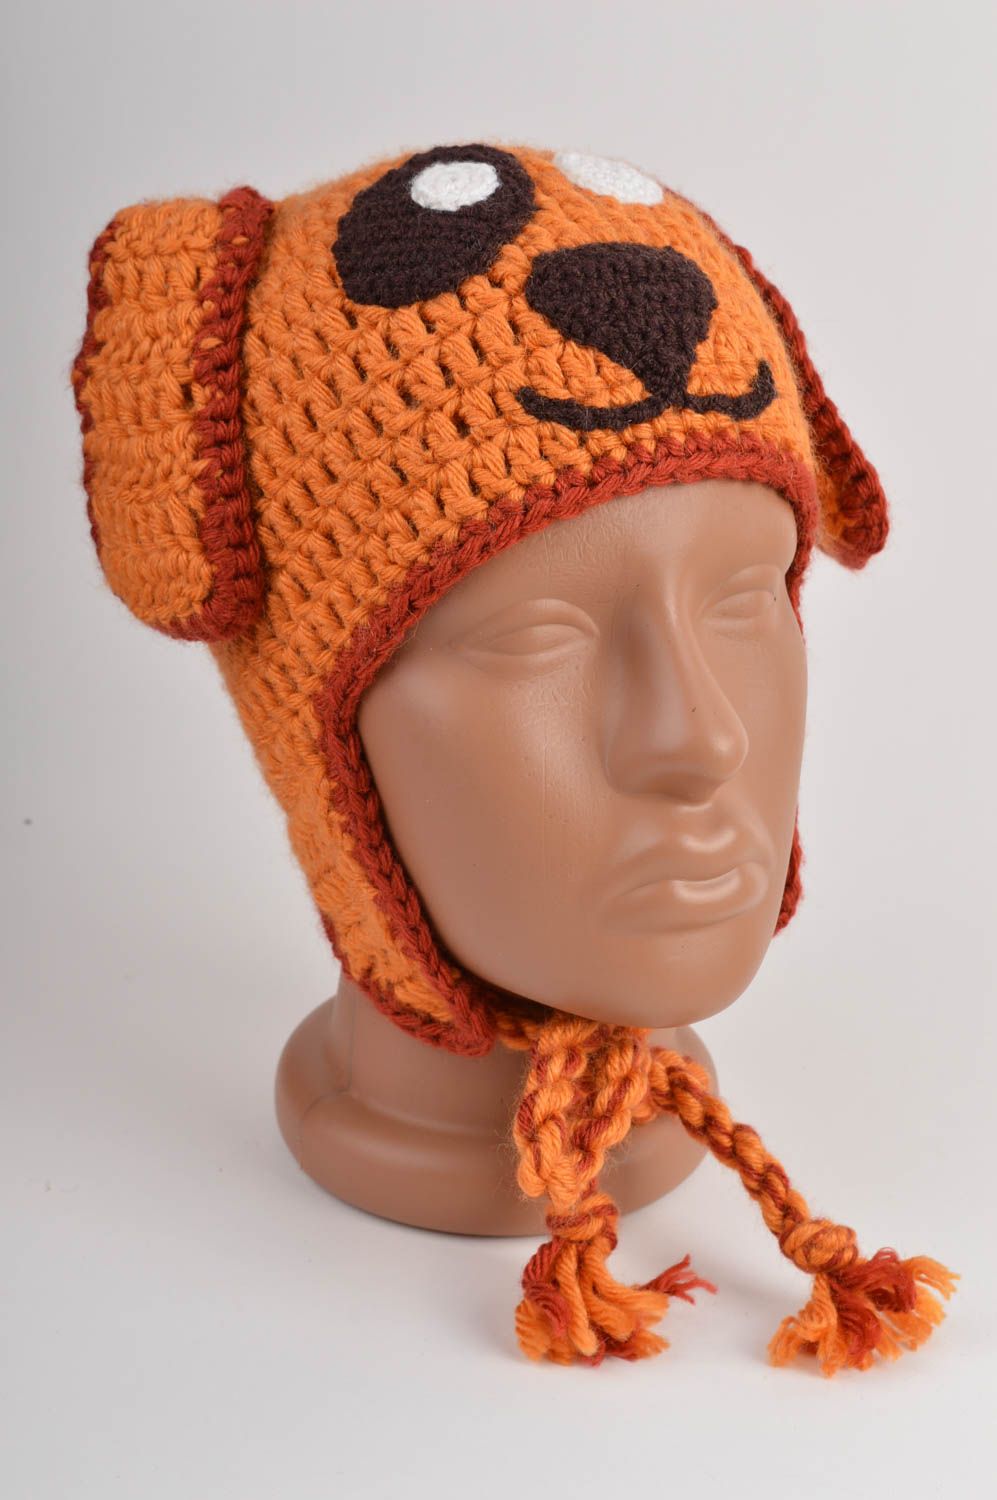 Crochet baby hat handmade accessories toddler hat presents for kids warm hat photo 2